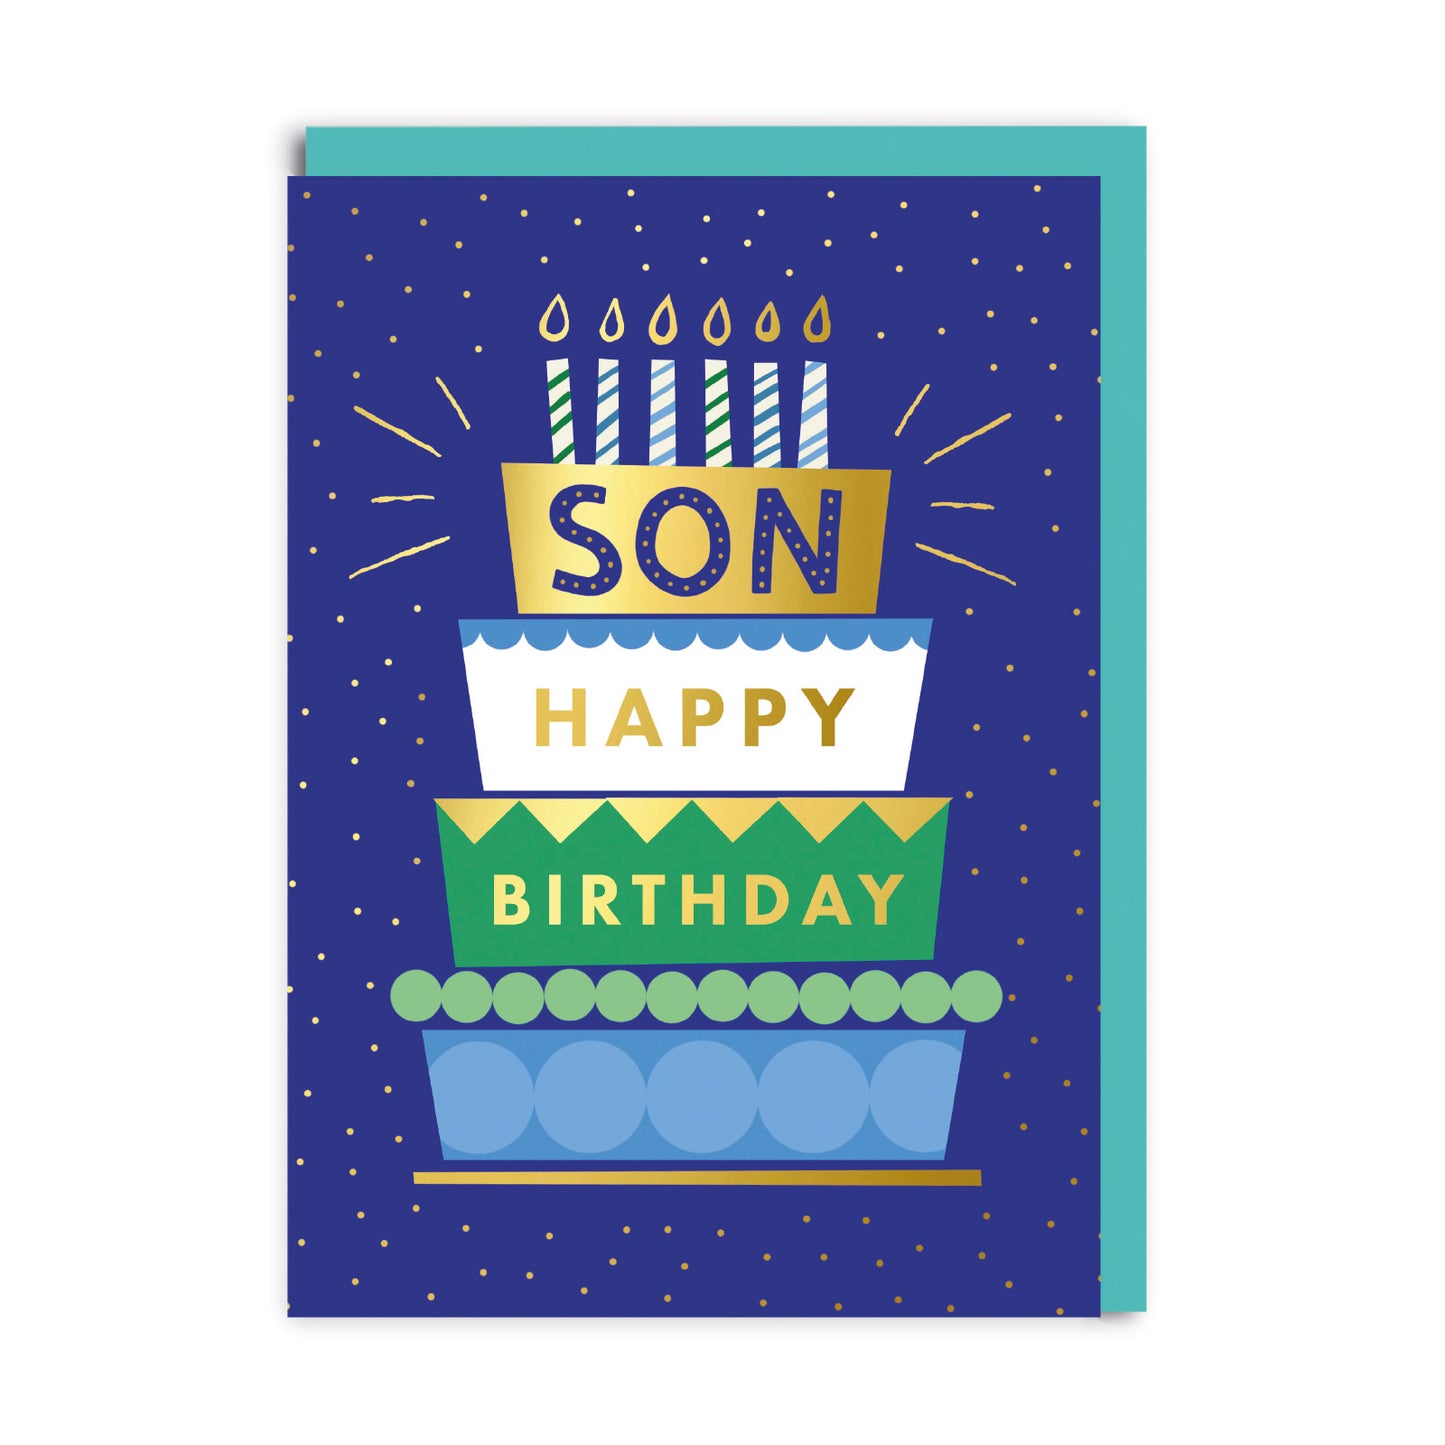 Happy Birthday Son Cake Card